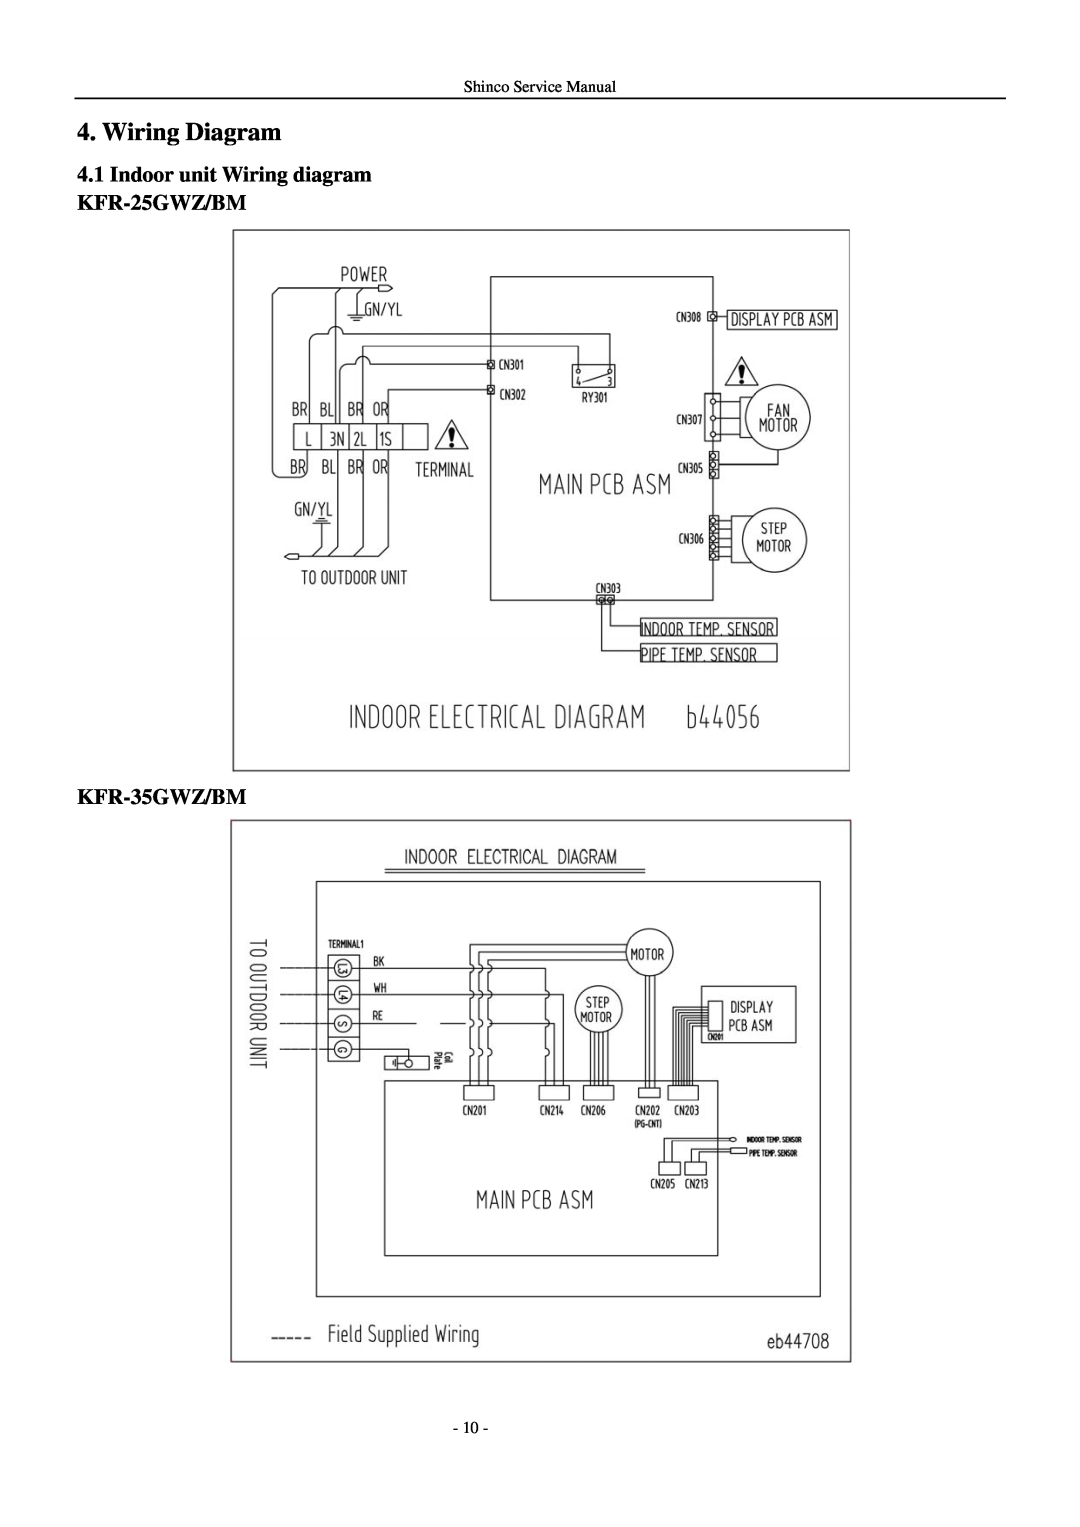 Shinco KFR-25GWZ BM service manual Wiring Diagram, 4.1Indoor unit Wiring diagram KFR-25GWZ/BM, KFR-35GWZ/BM 